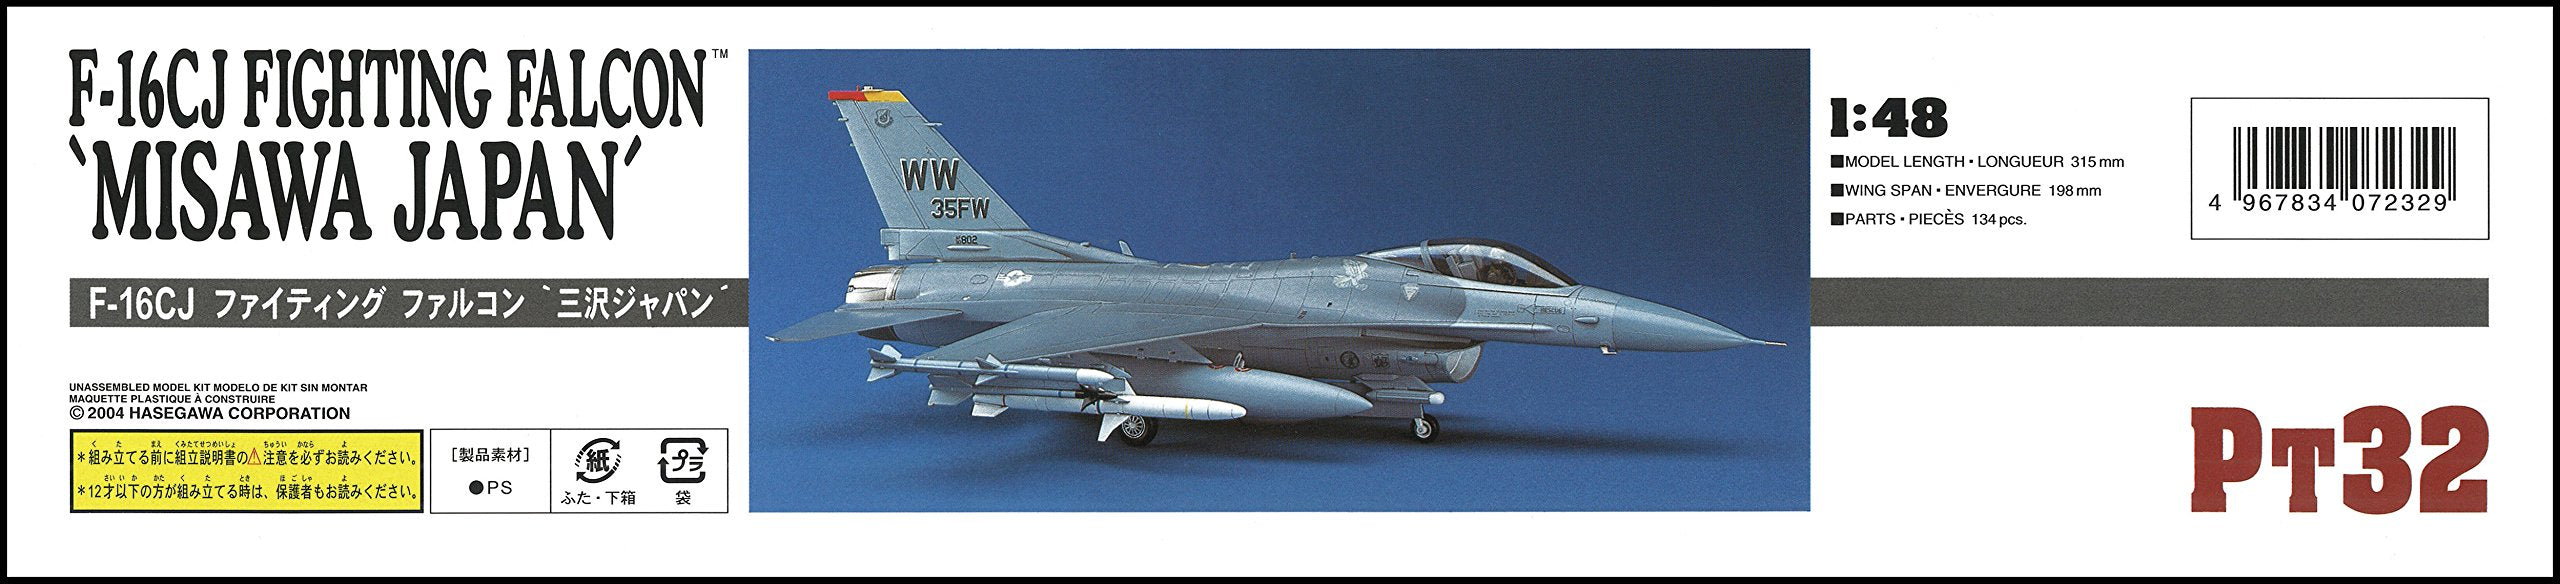 HASEGAWA 1/48 F-16Cj Fighting Falcon 'Misawa Japan' US Air Force Tactical Fighter Plastikmodell